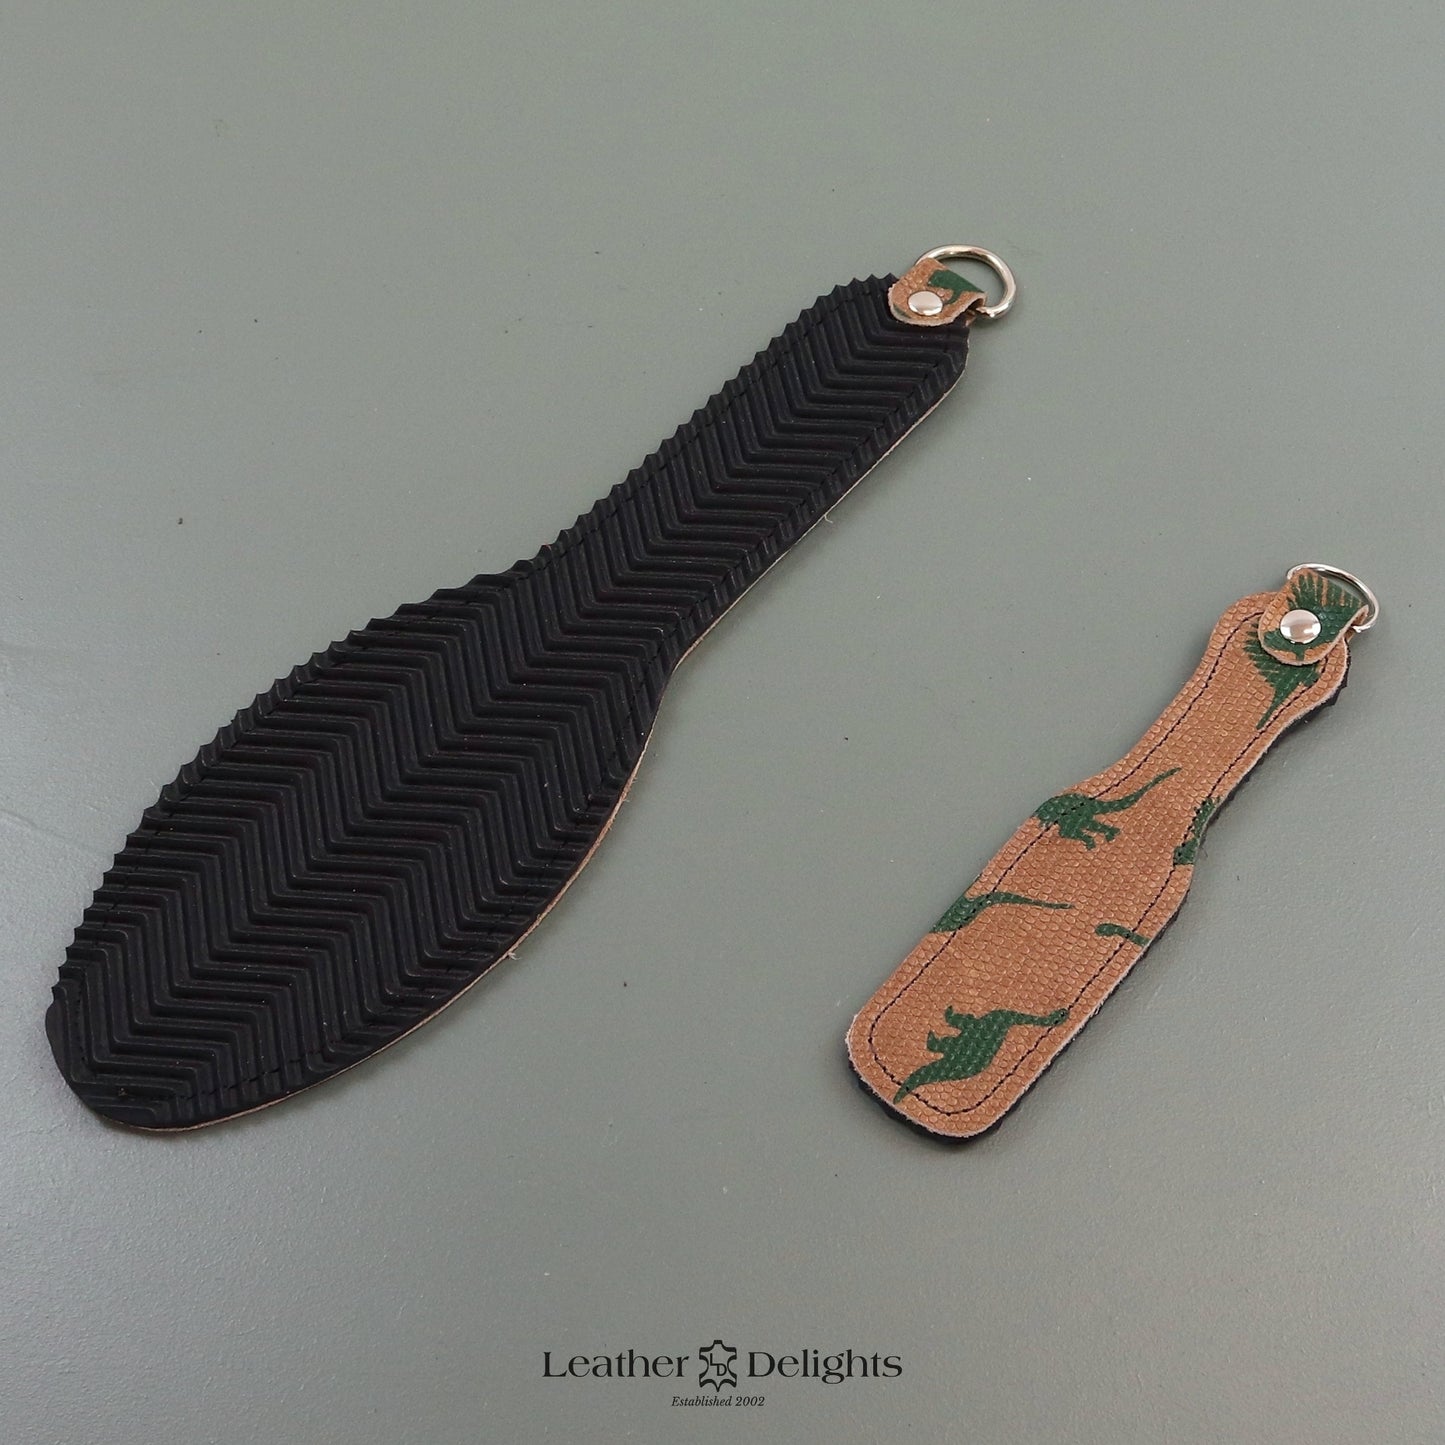 Shoe Sole - Dinosaur Print Leather & Ripple Rubber